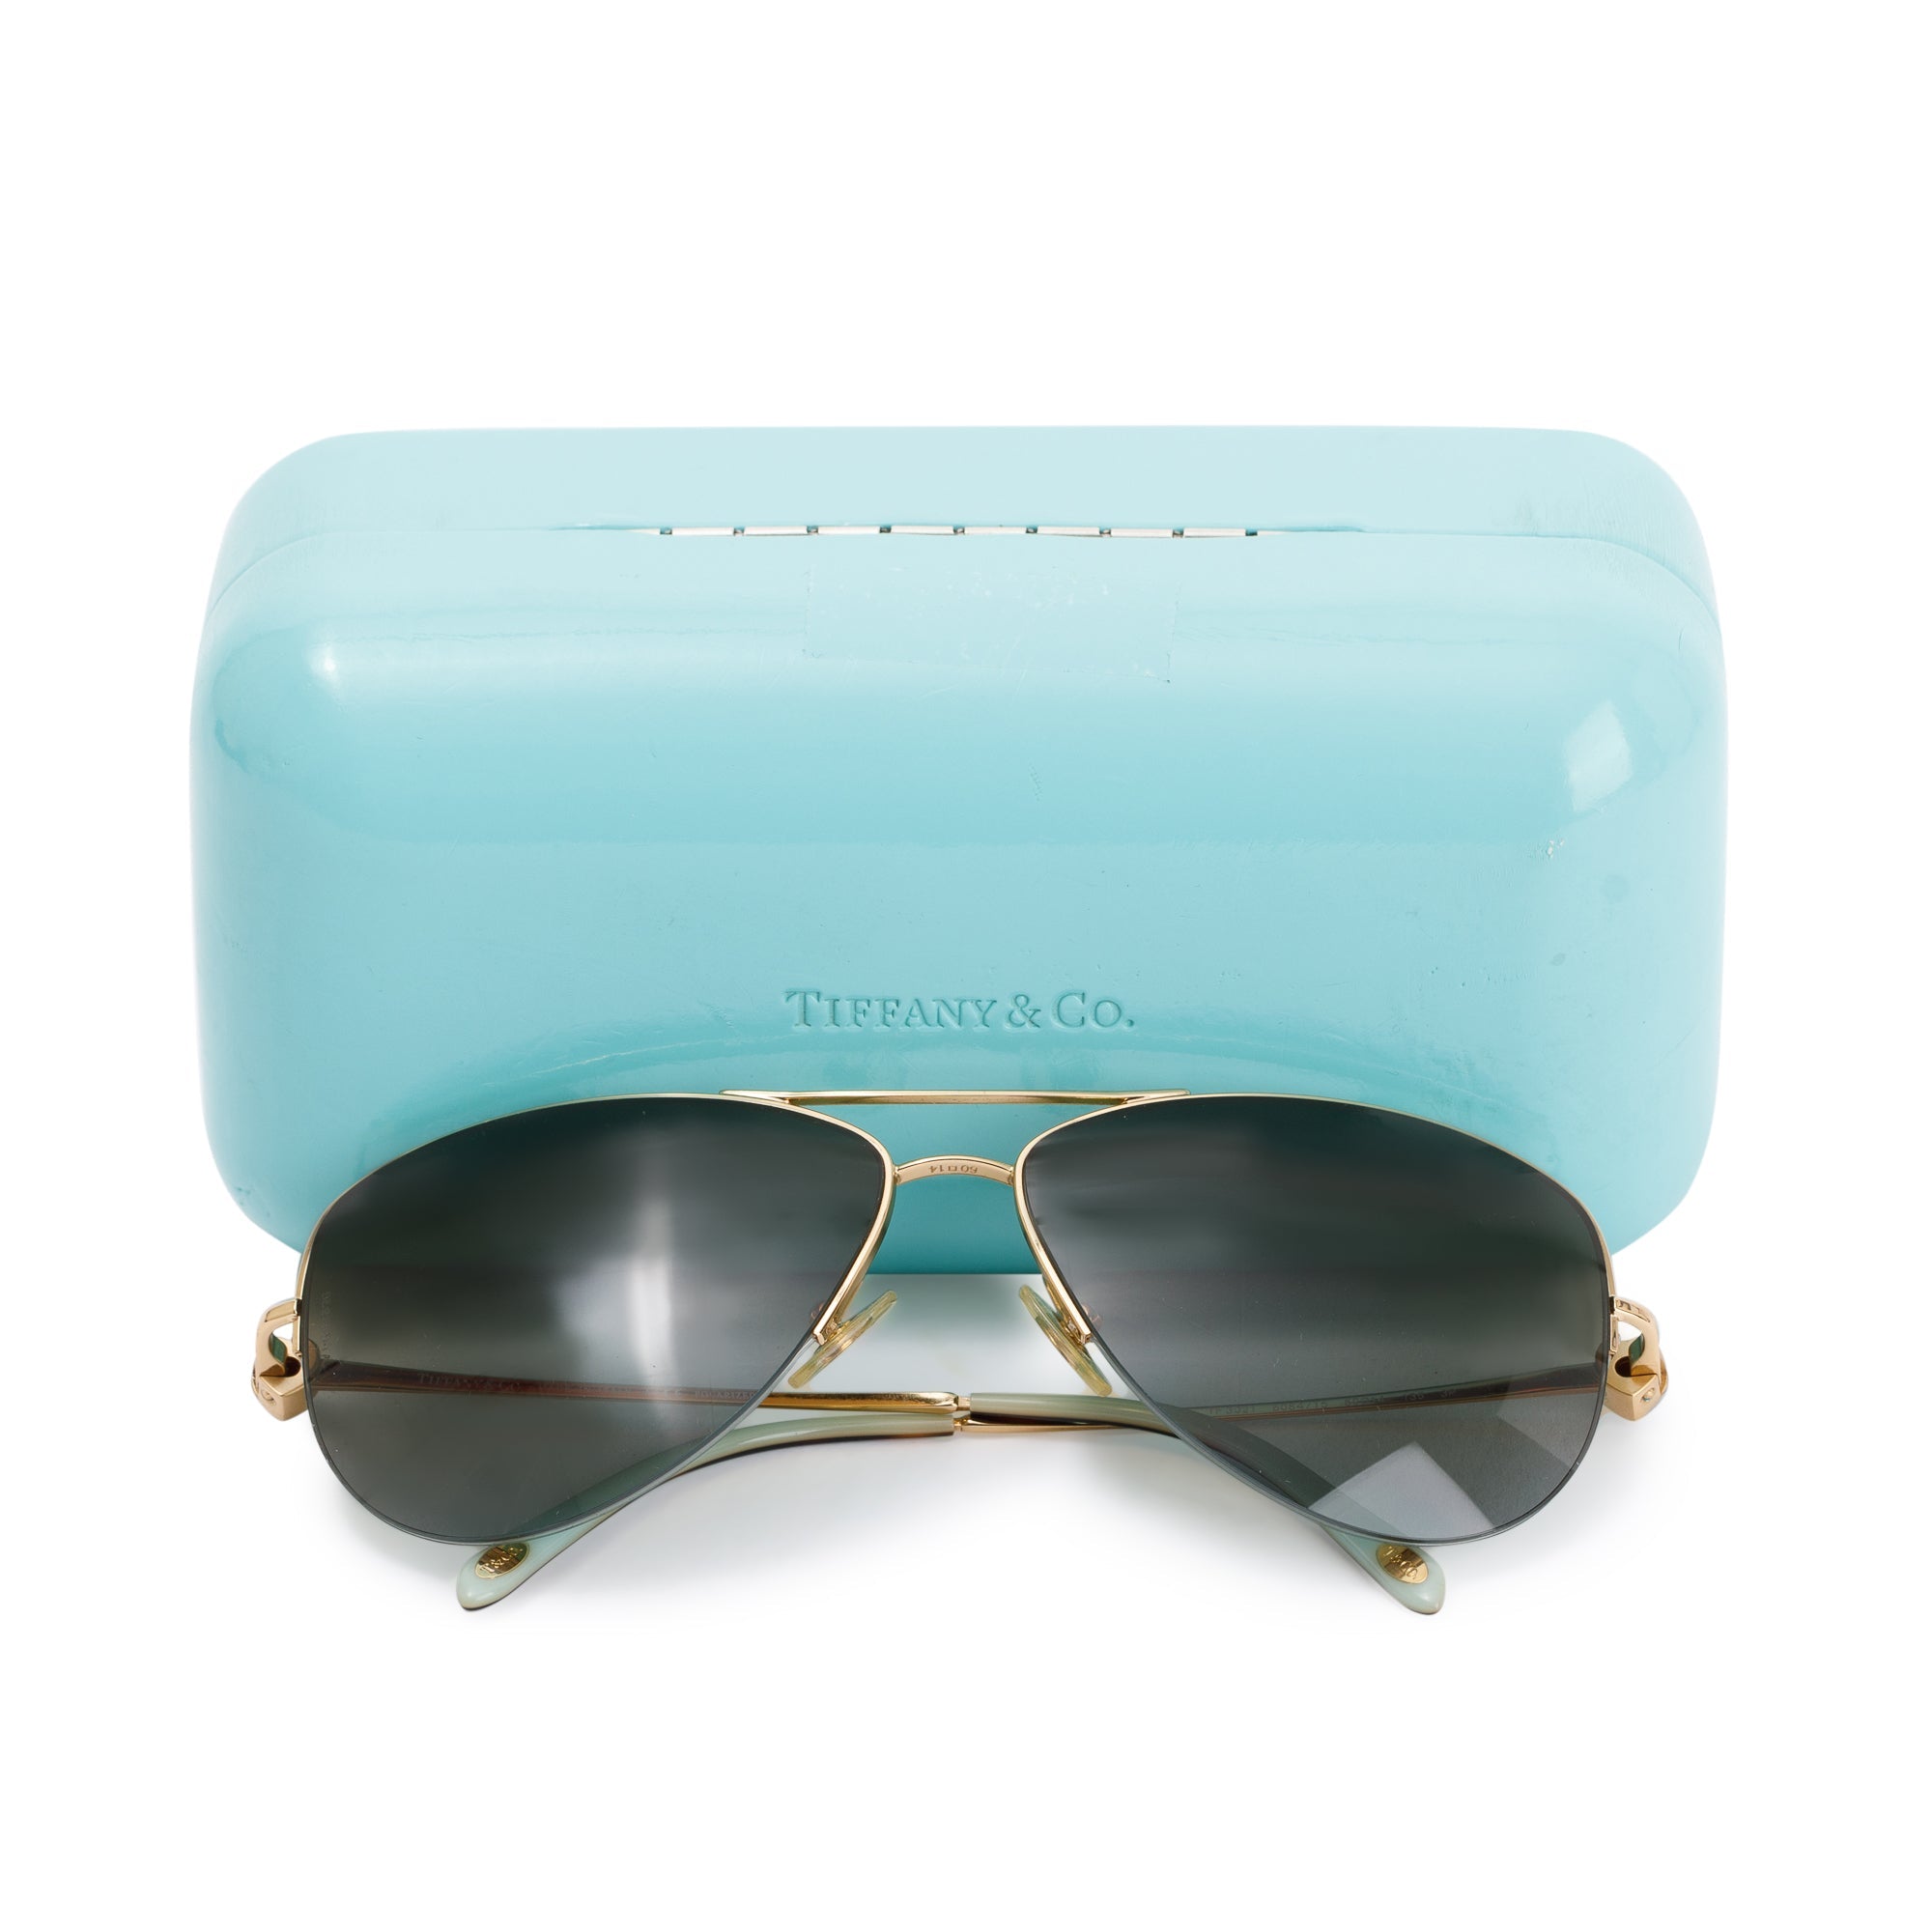 Tiffany & Co. Aviator Sunglasses for Women | Mercari